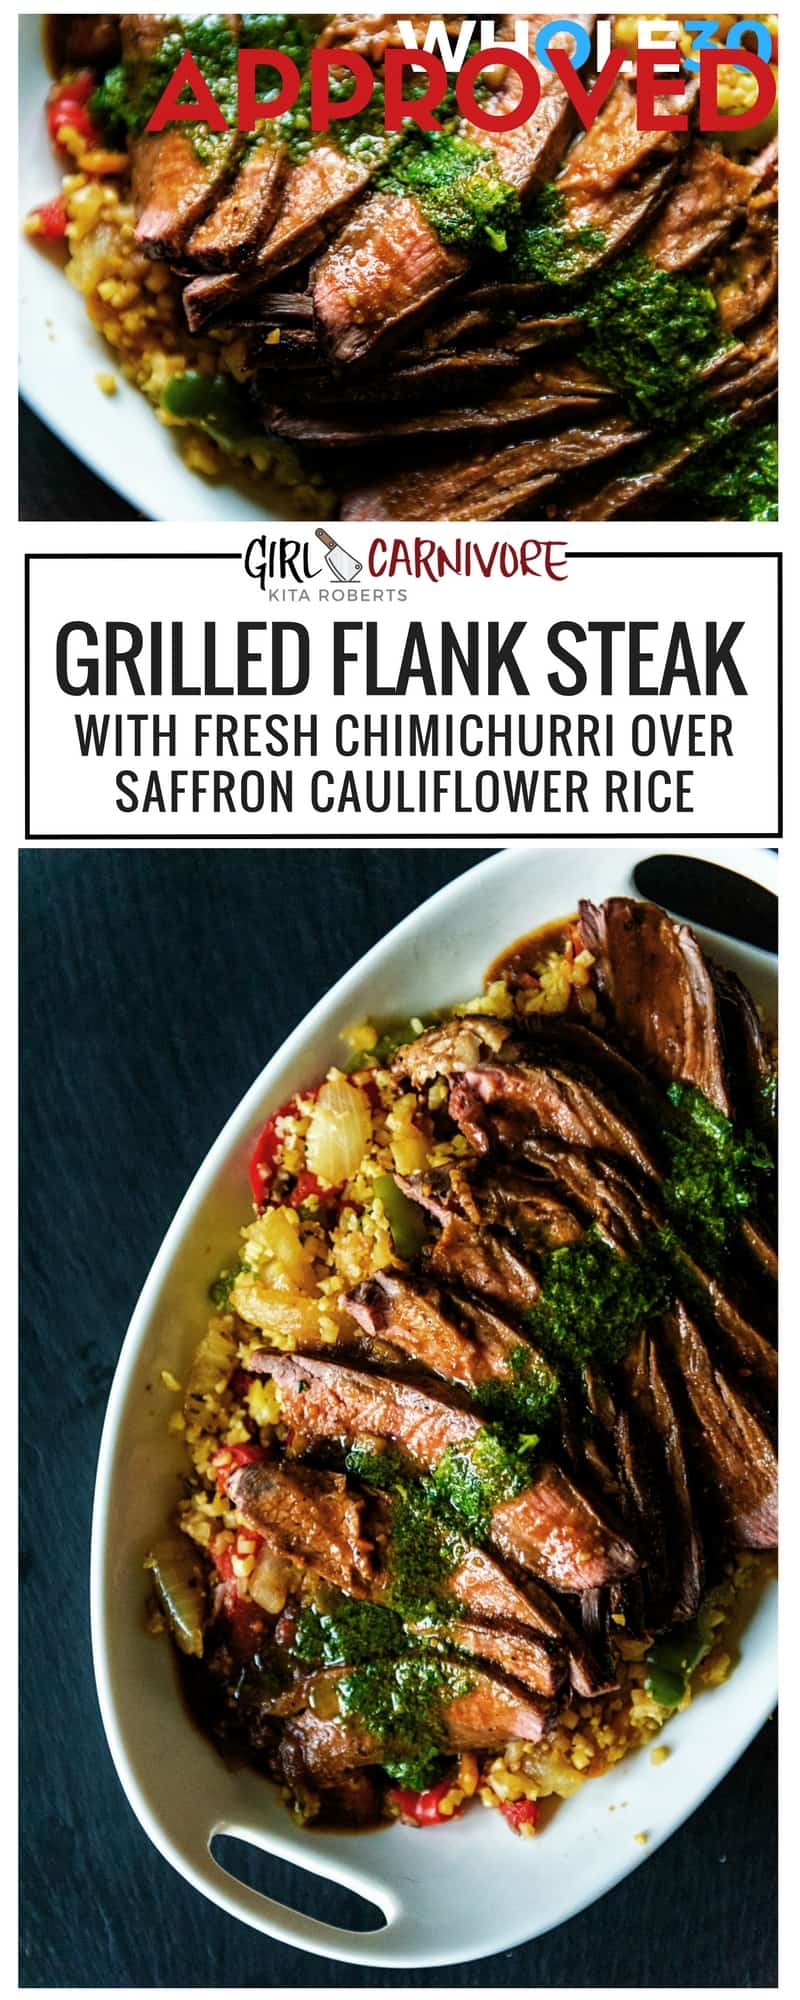 Grilled Flank Steak with fresh Chimichurri over Saffron Cauliflower Rice